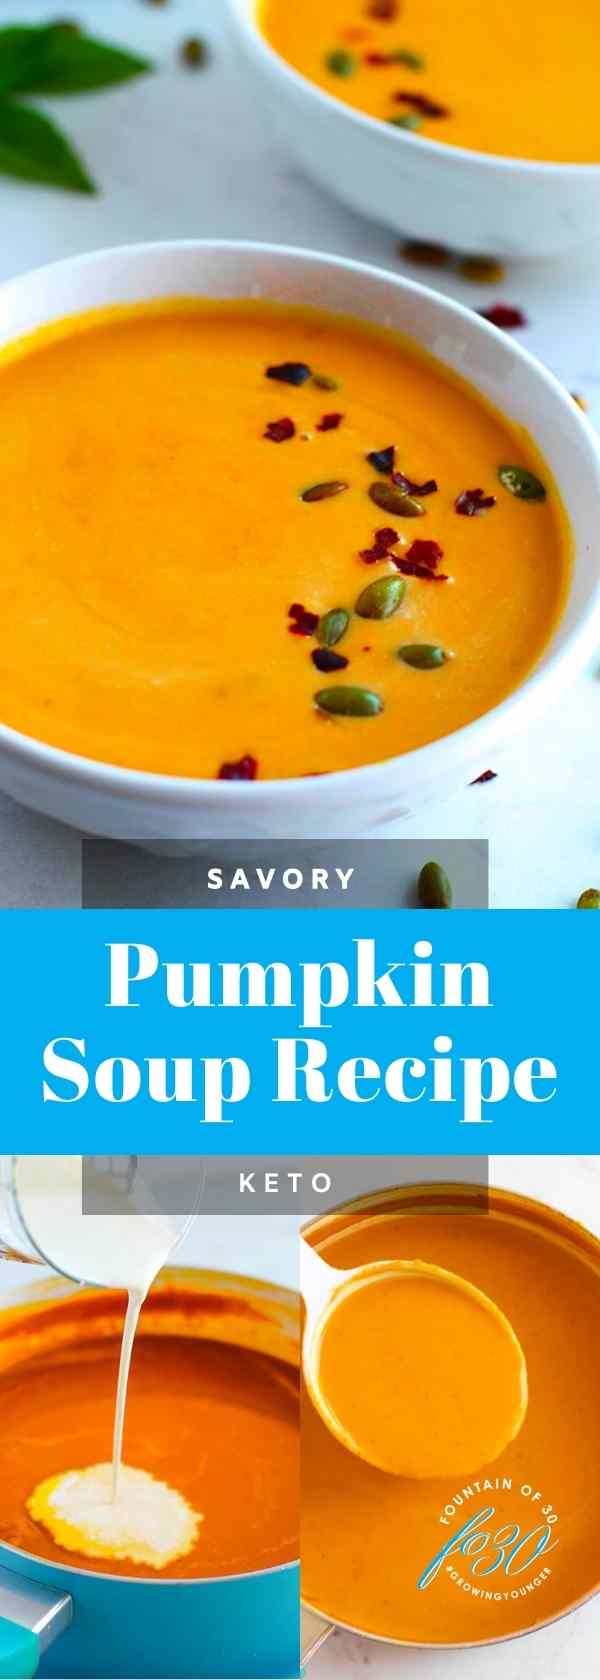 savory pumpkin soup recipe fountainof30